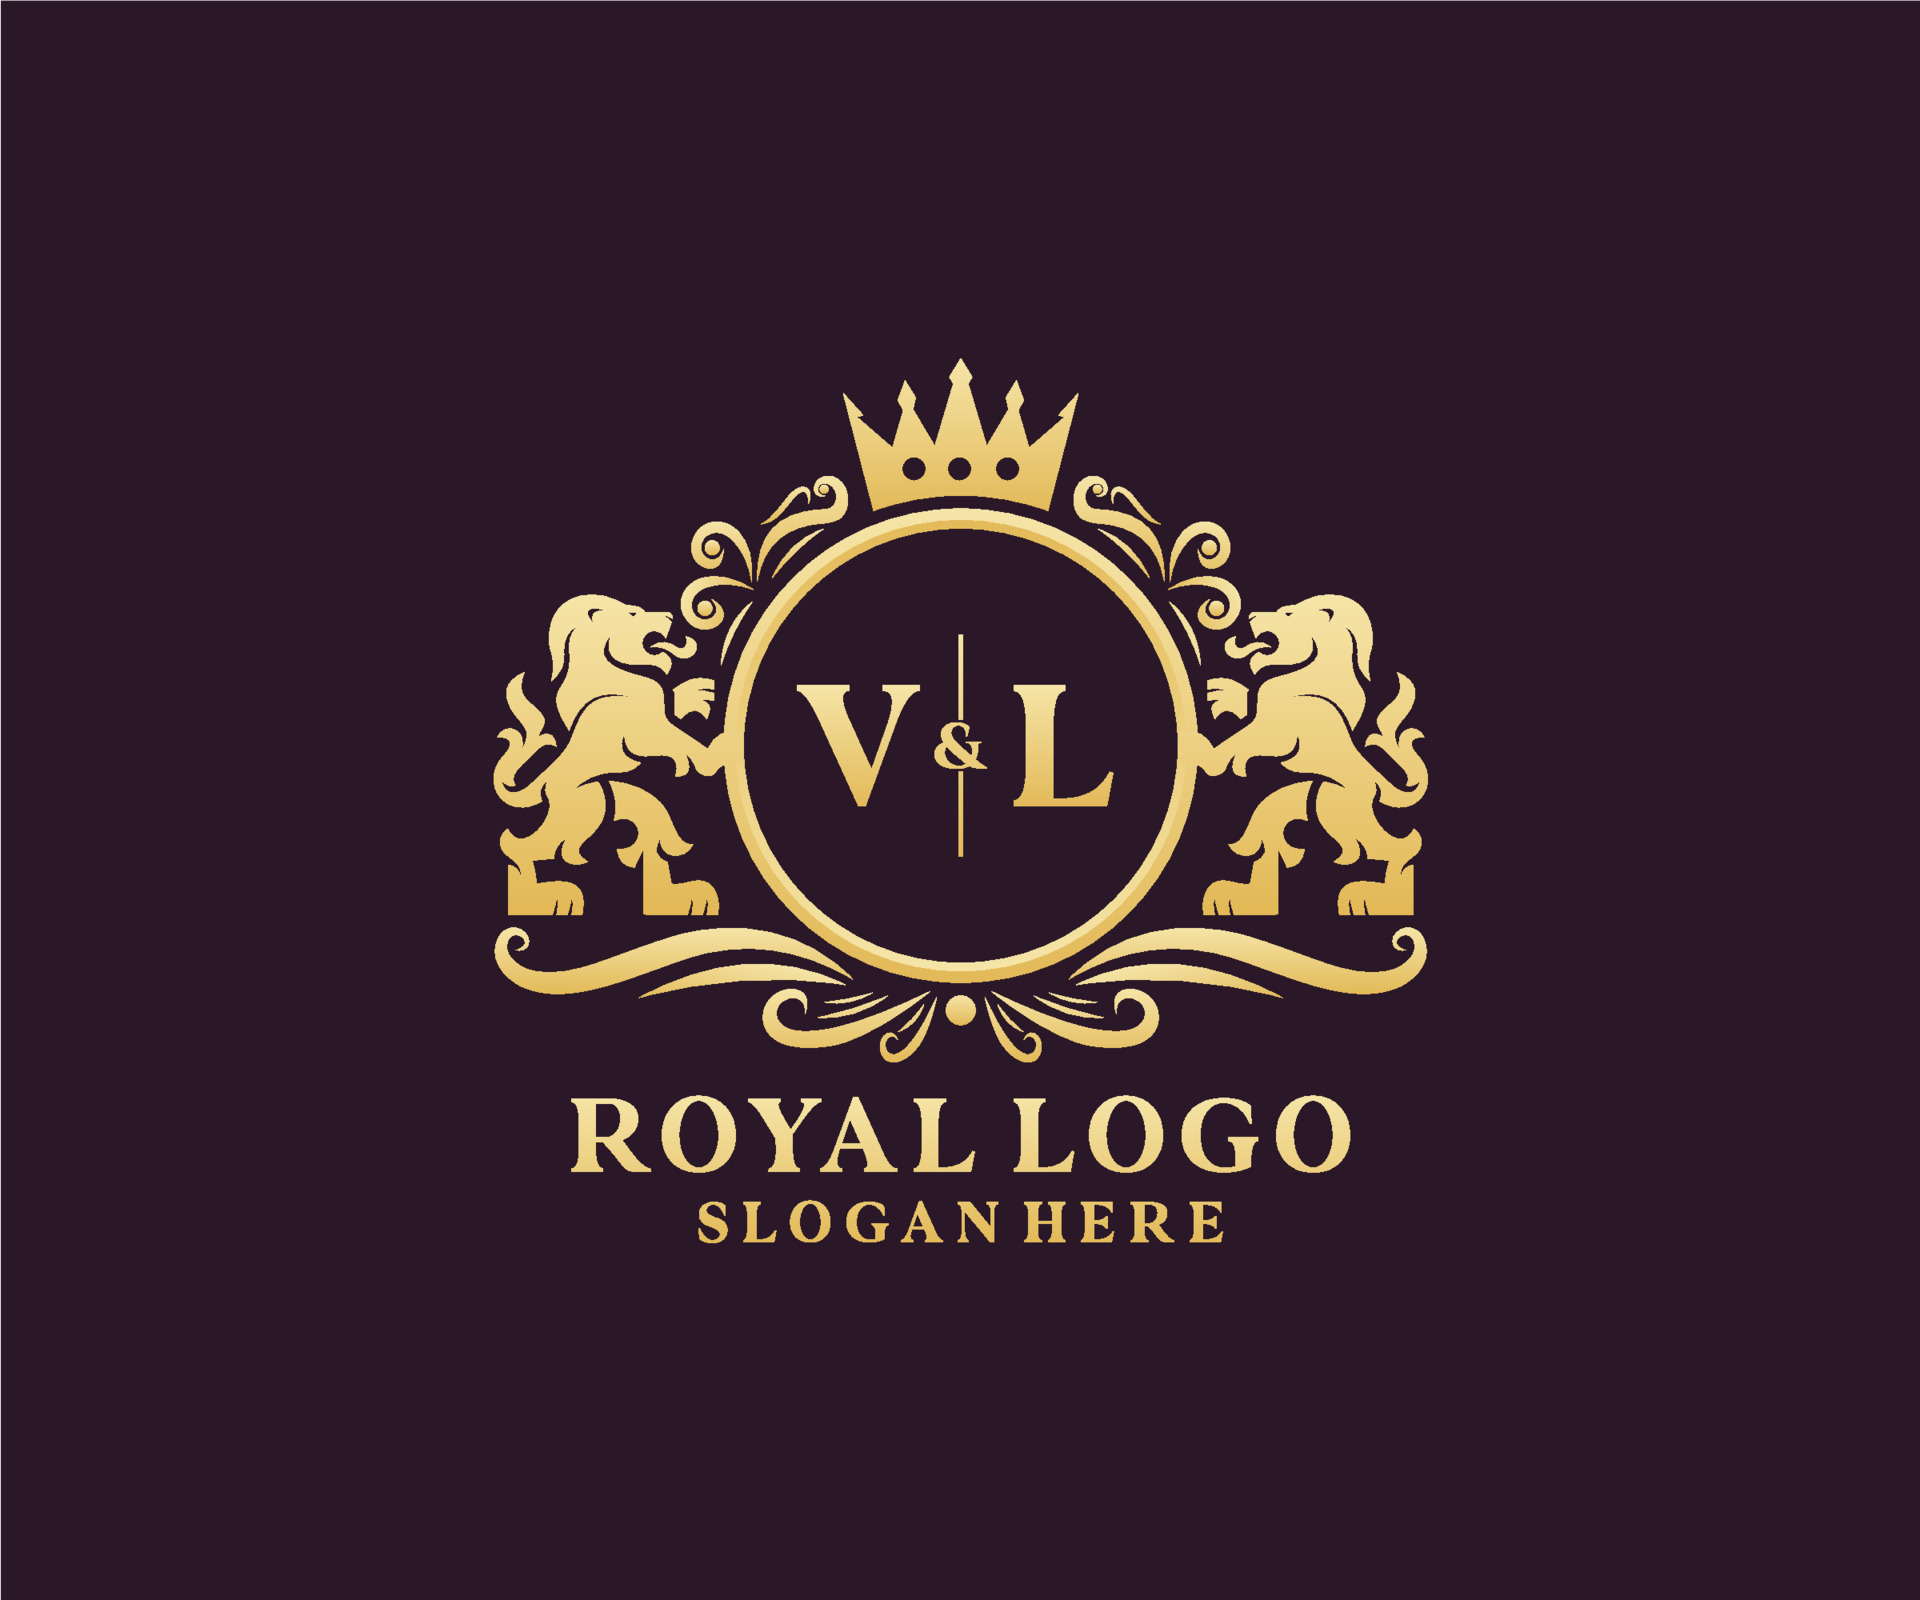 Premium Vector  Vl logo design template